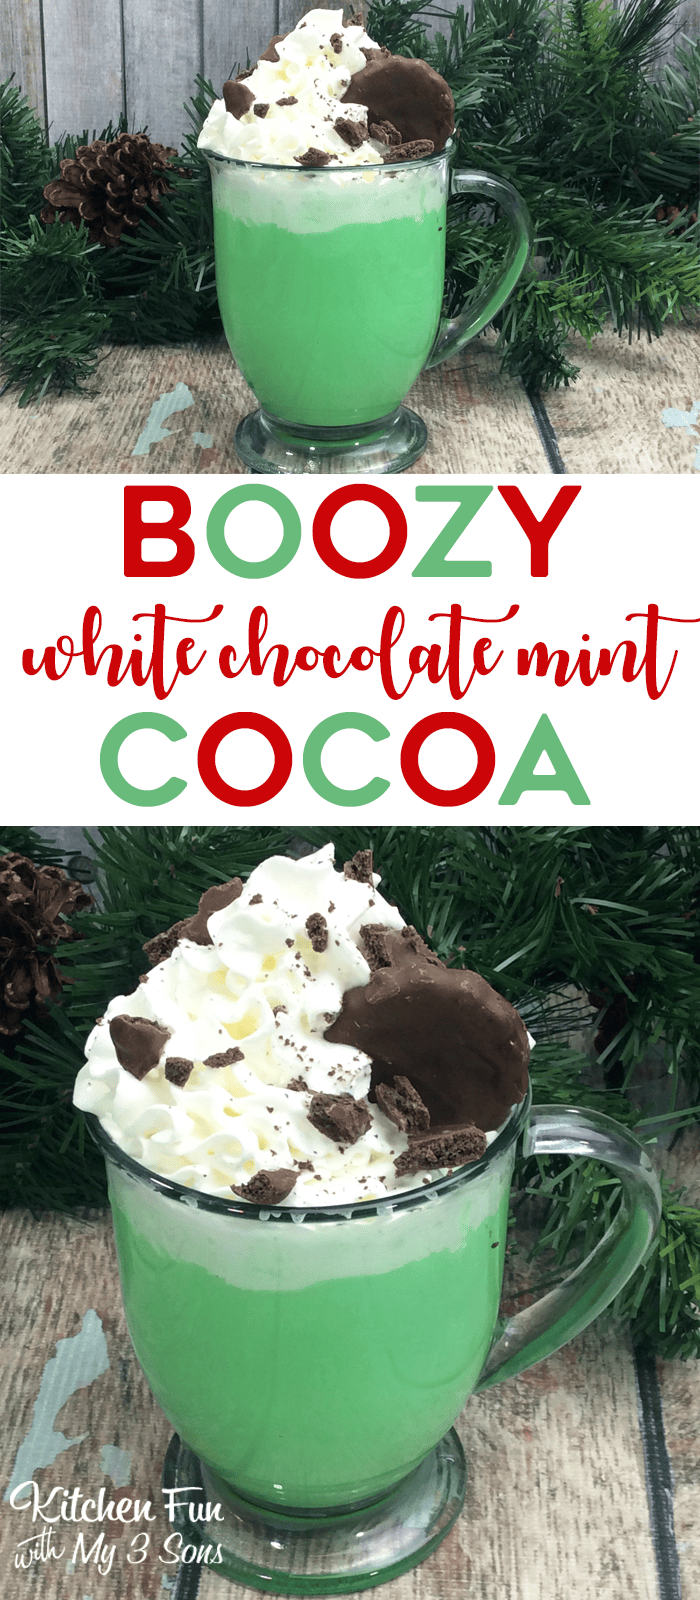 Boozy white chocolate mint cocoa